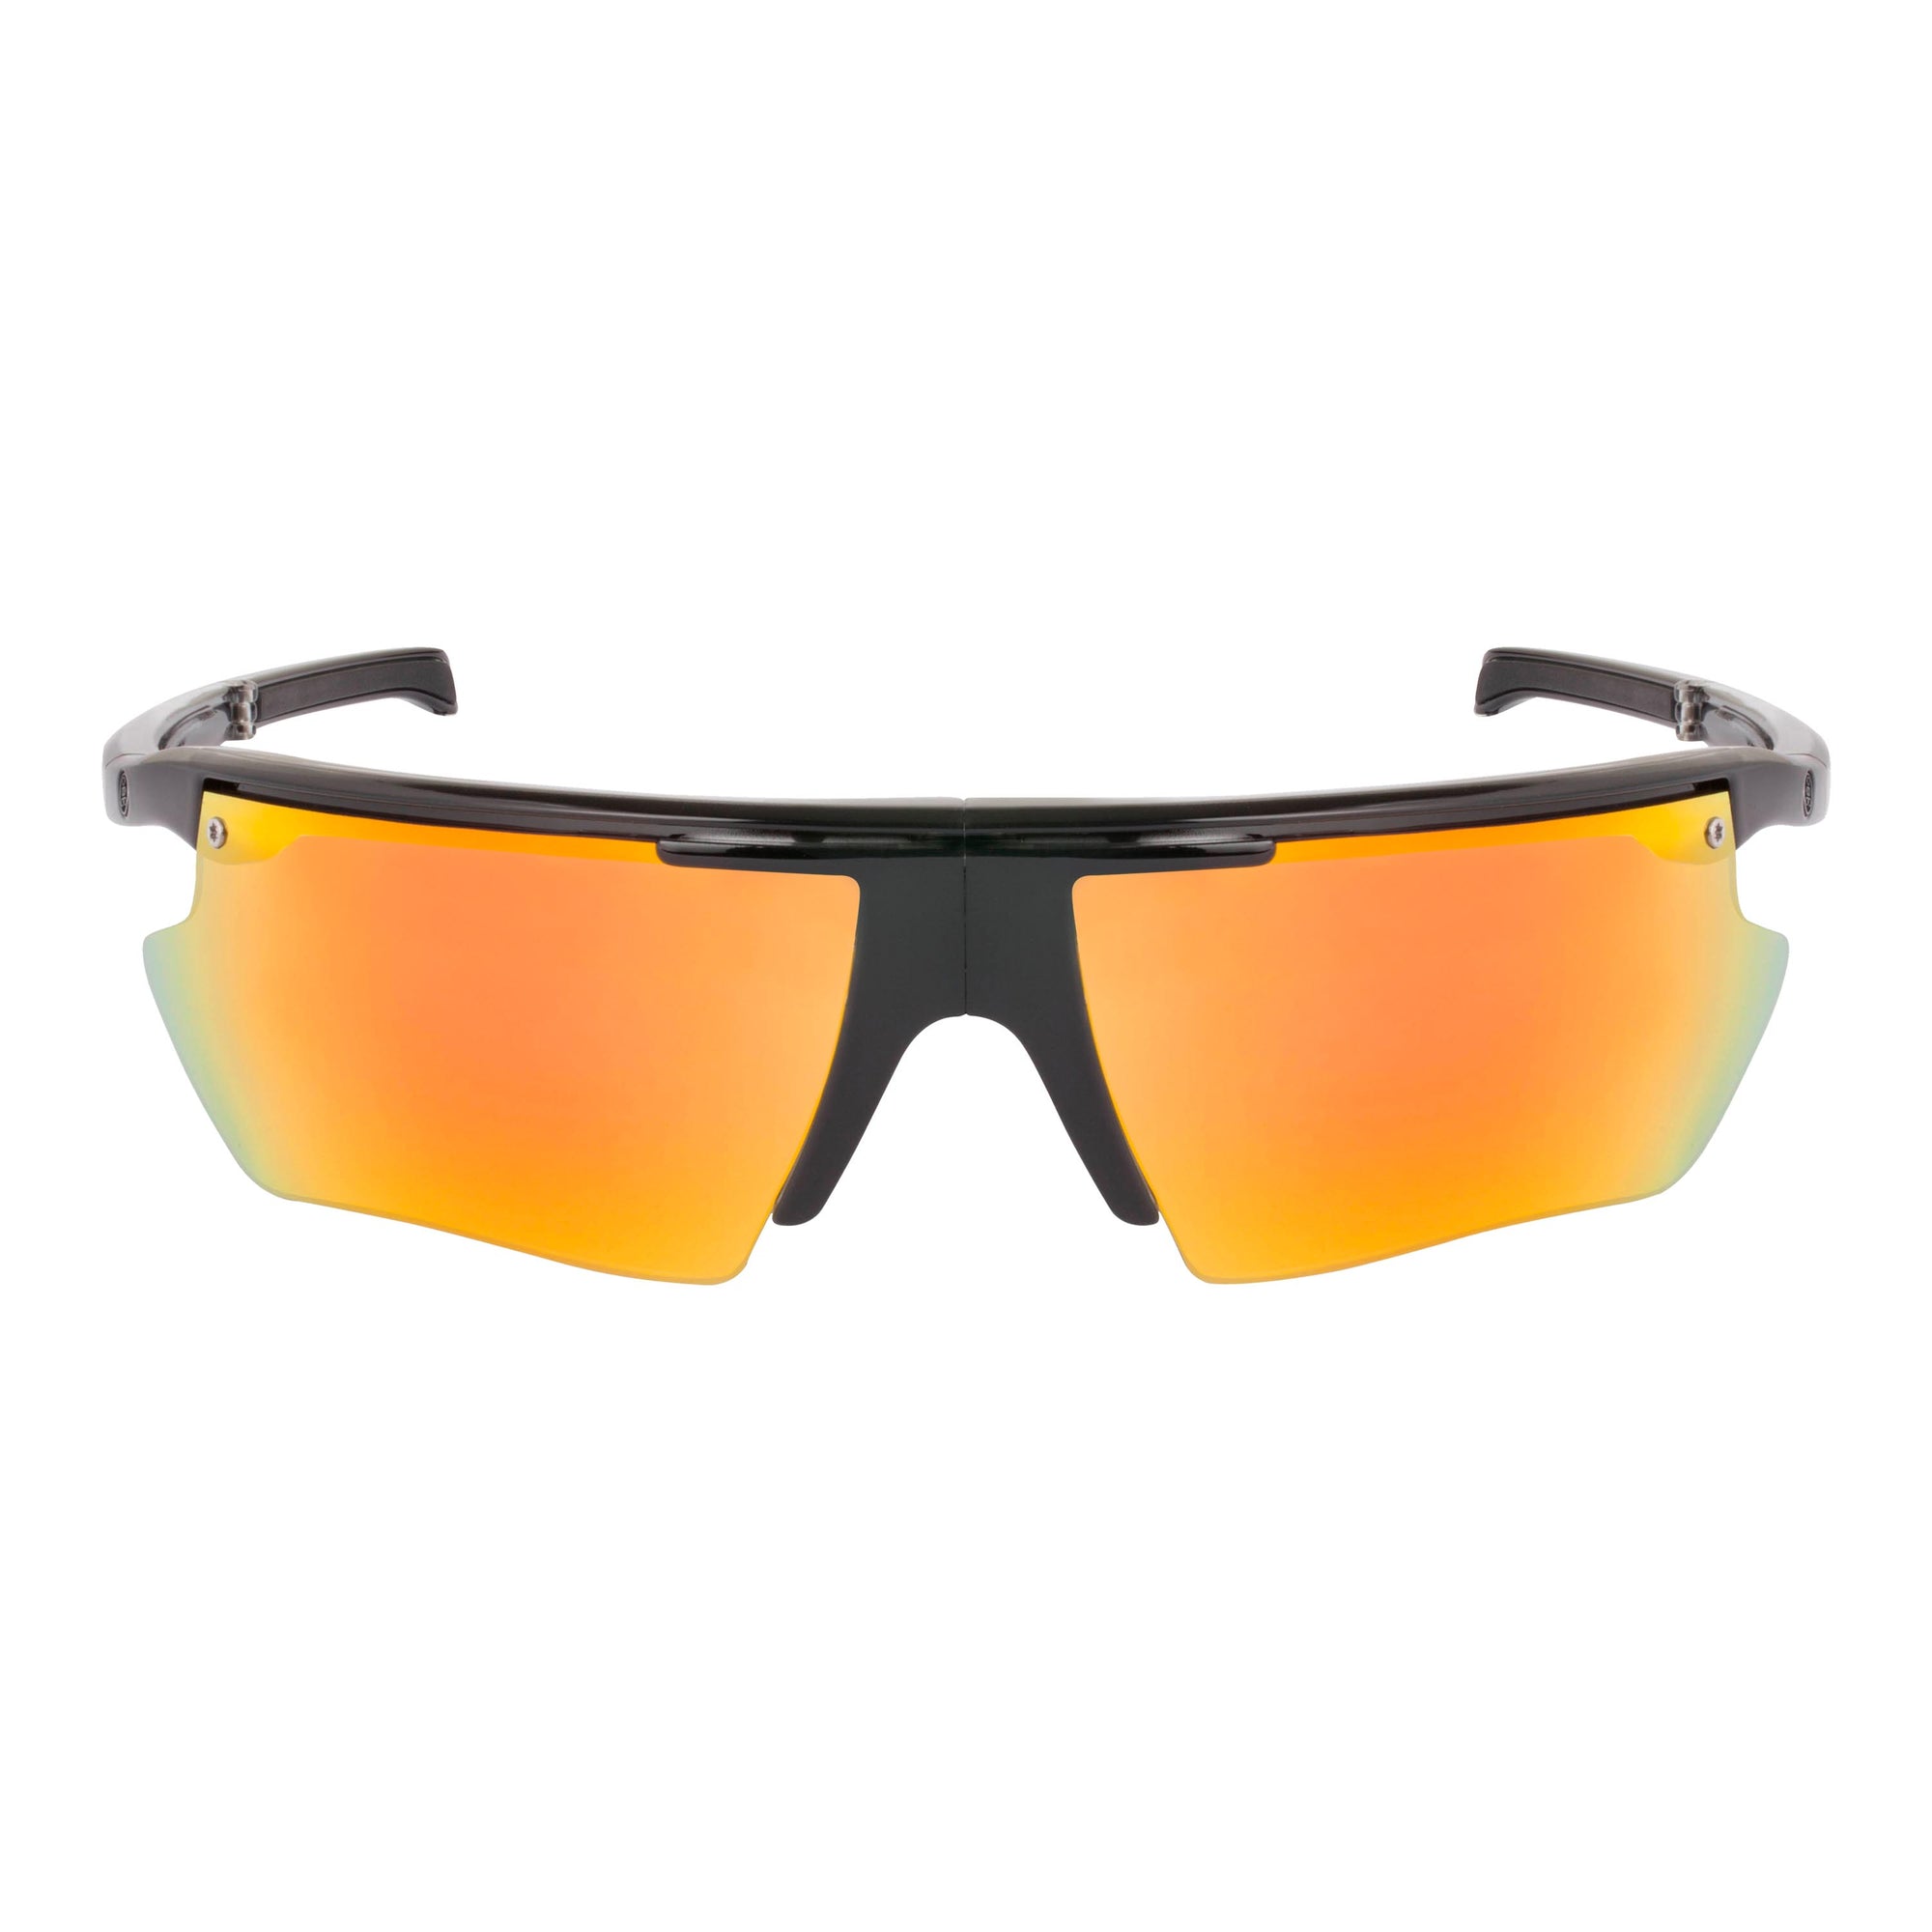 Popticals, Premium Compact Sunglasses, PopEdge, 040091-BLON, Polarized Sunglasses, Gloss Black over Crystal Frame, Gray Lenses with Orange Mirror Finish, Glam View